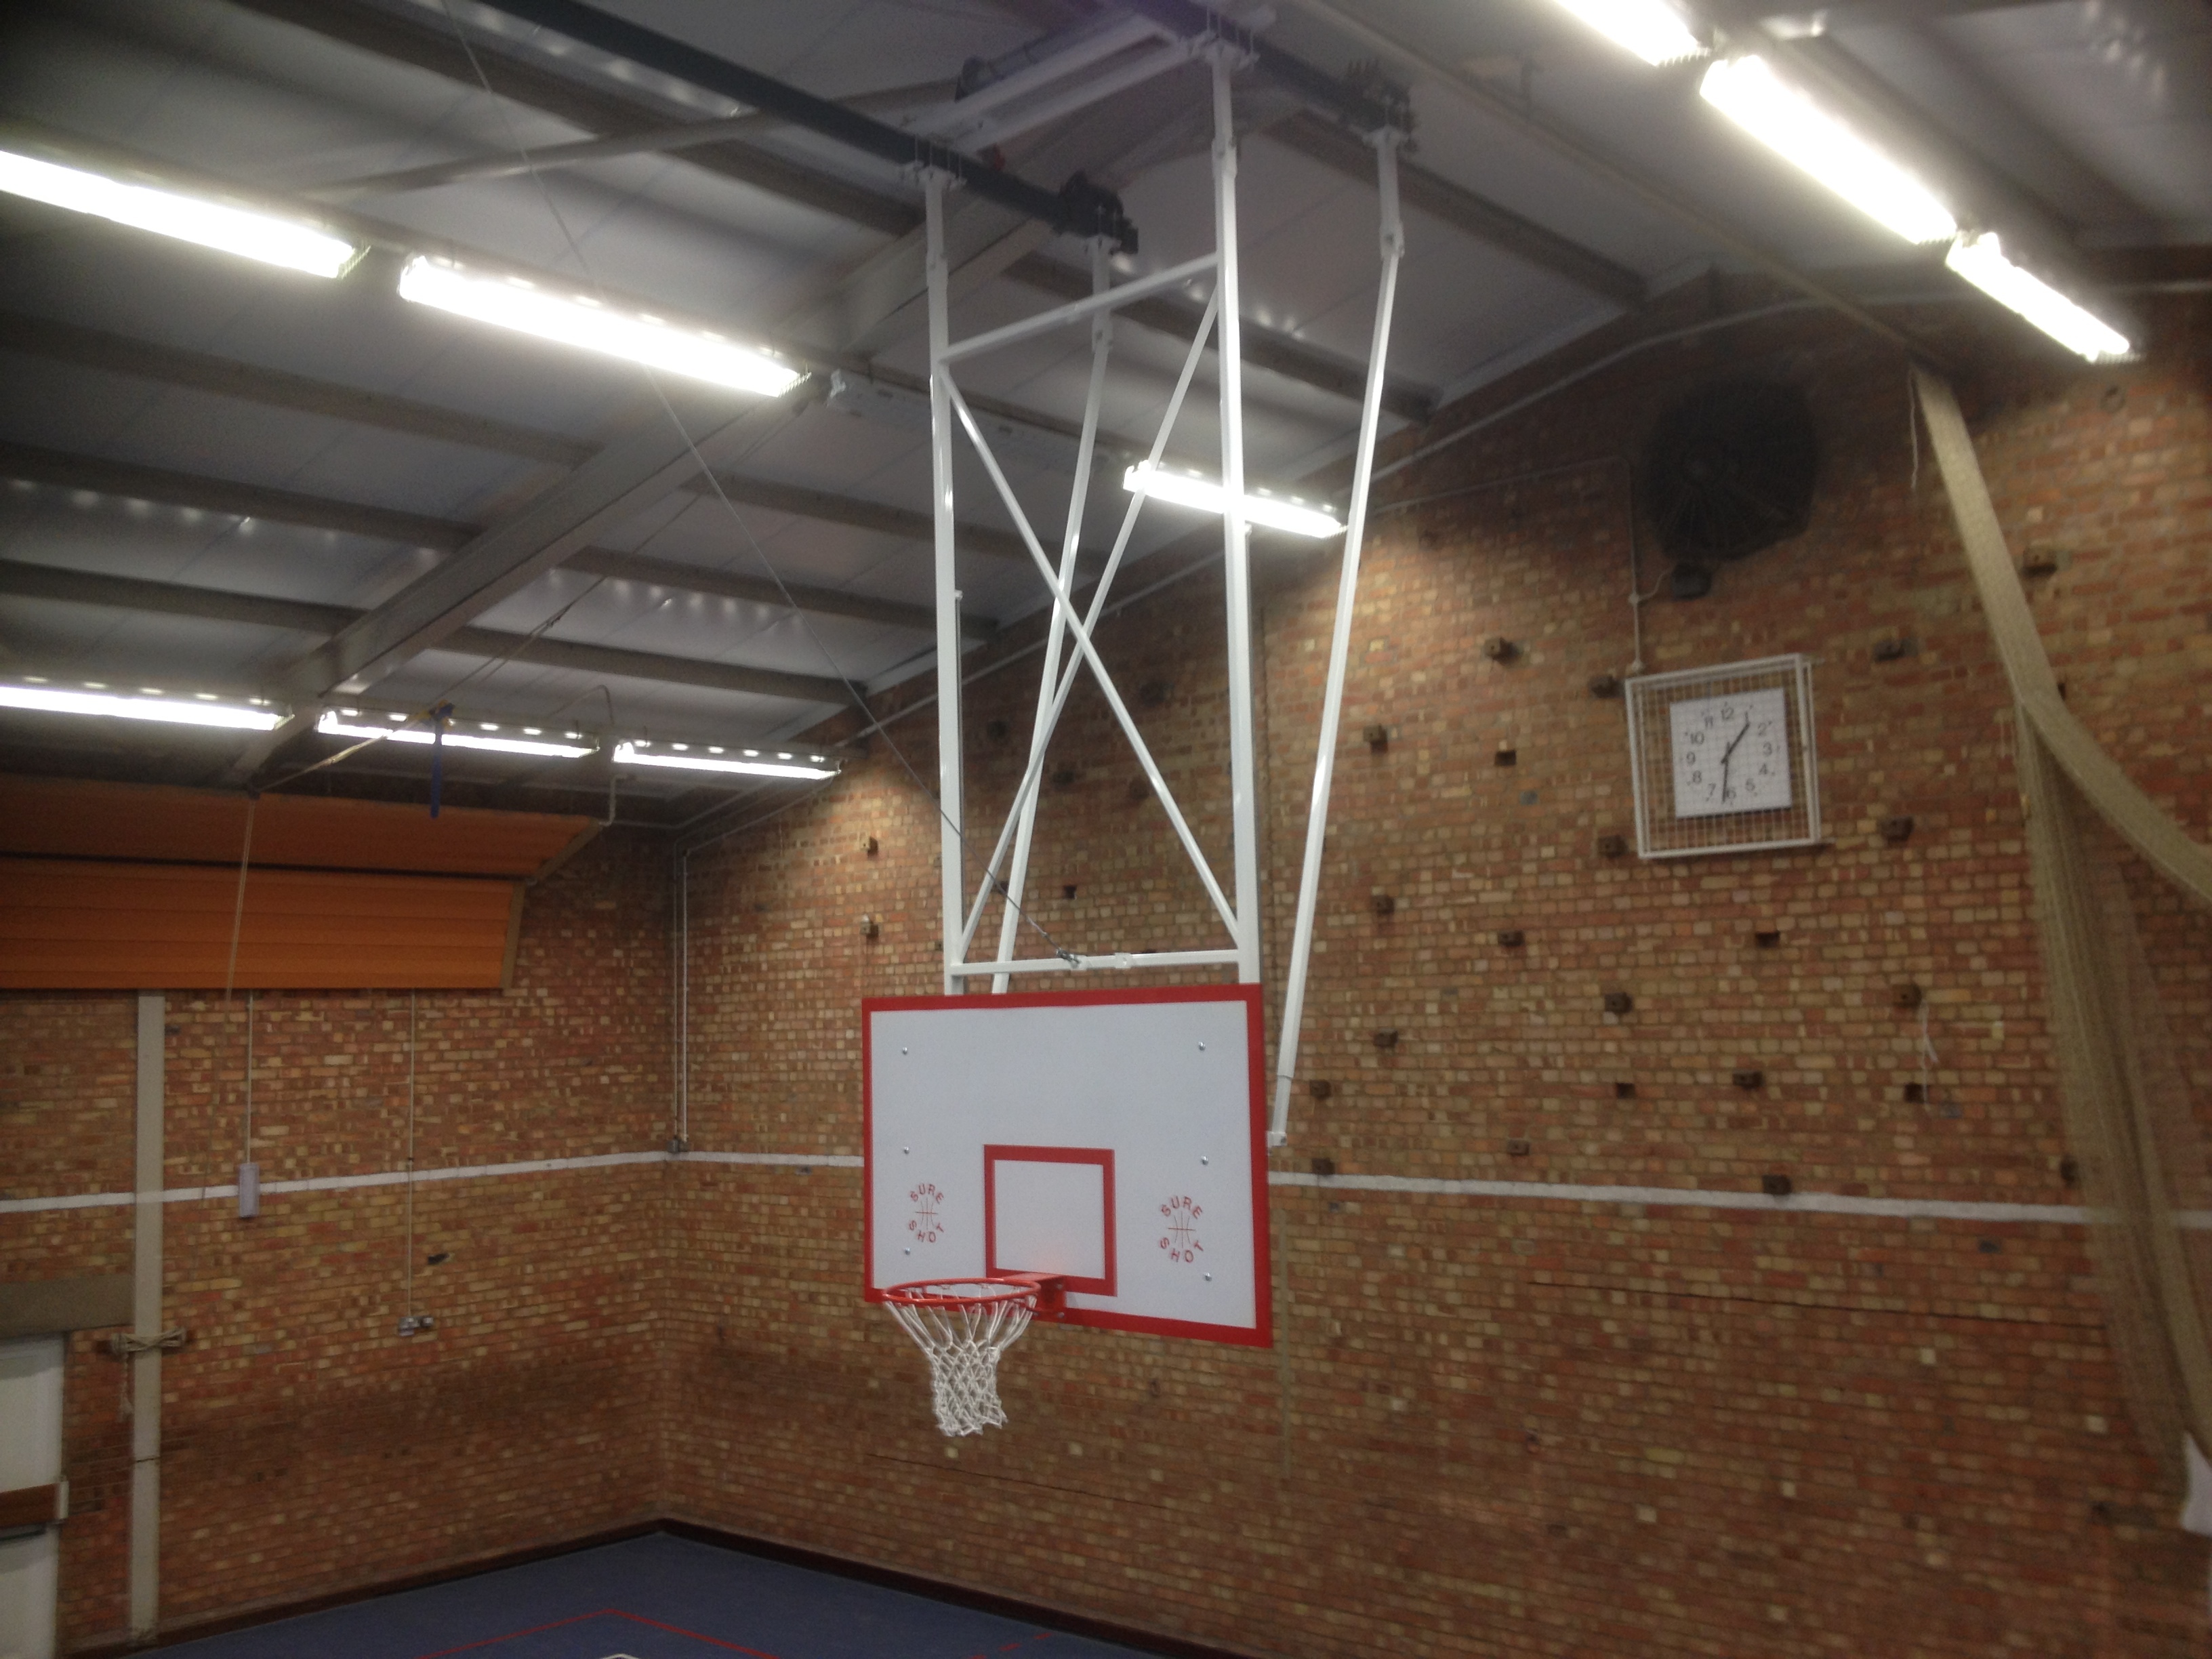 Roof mounted basketball goals